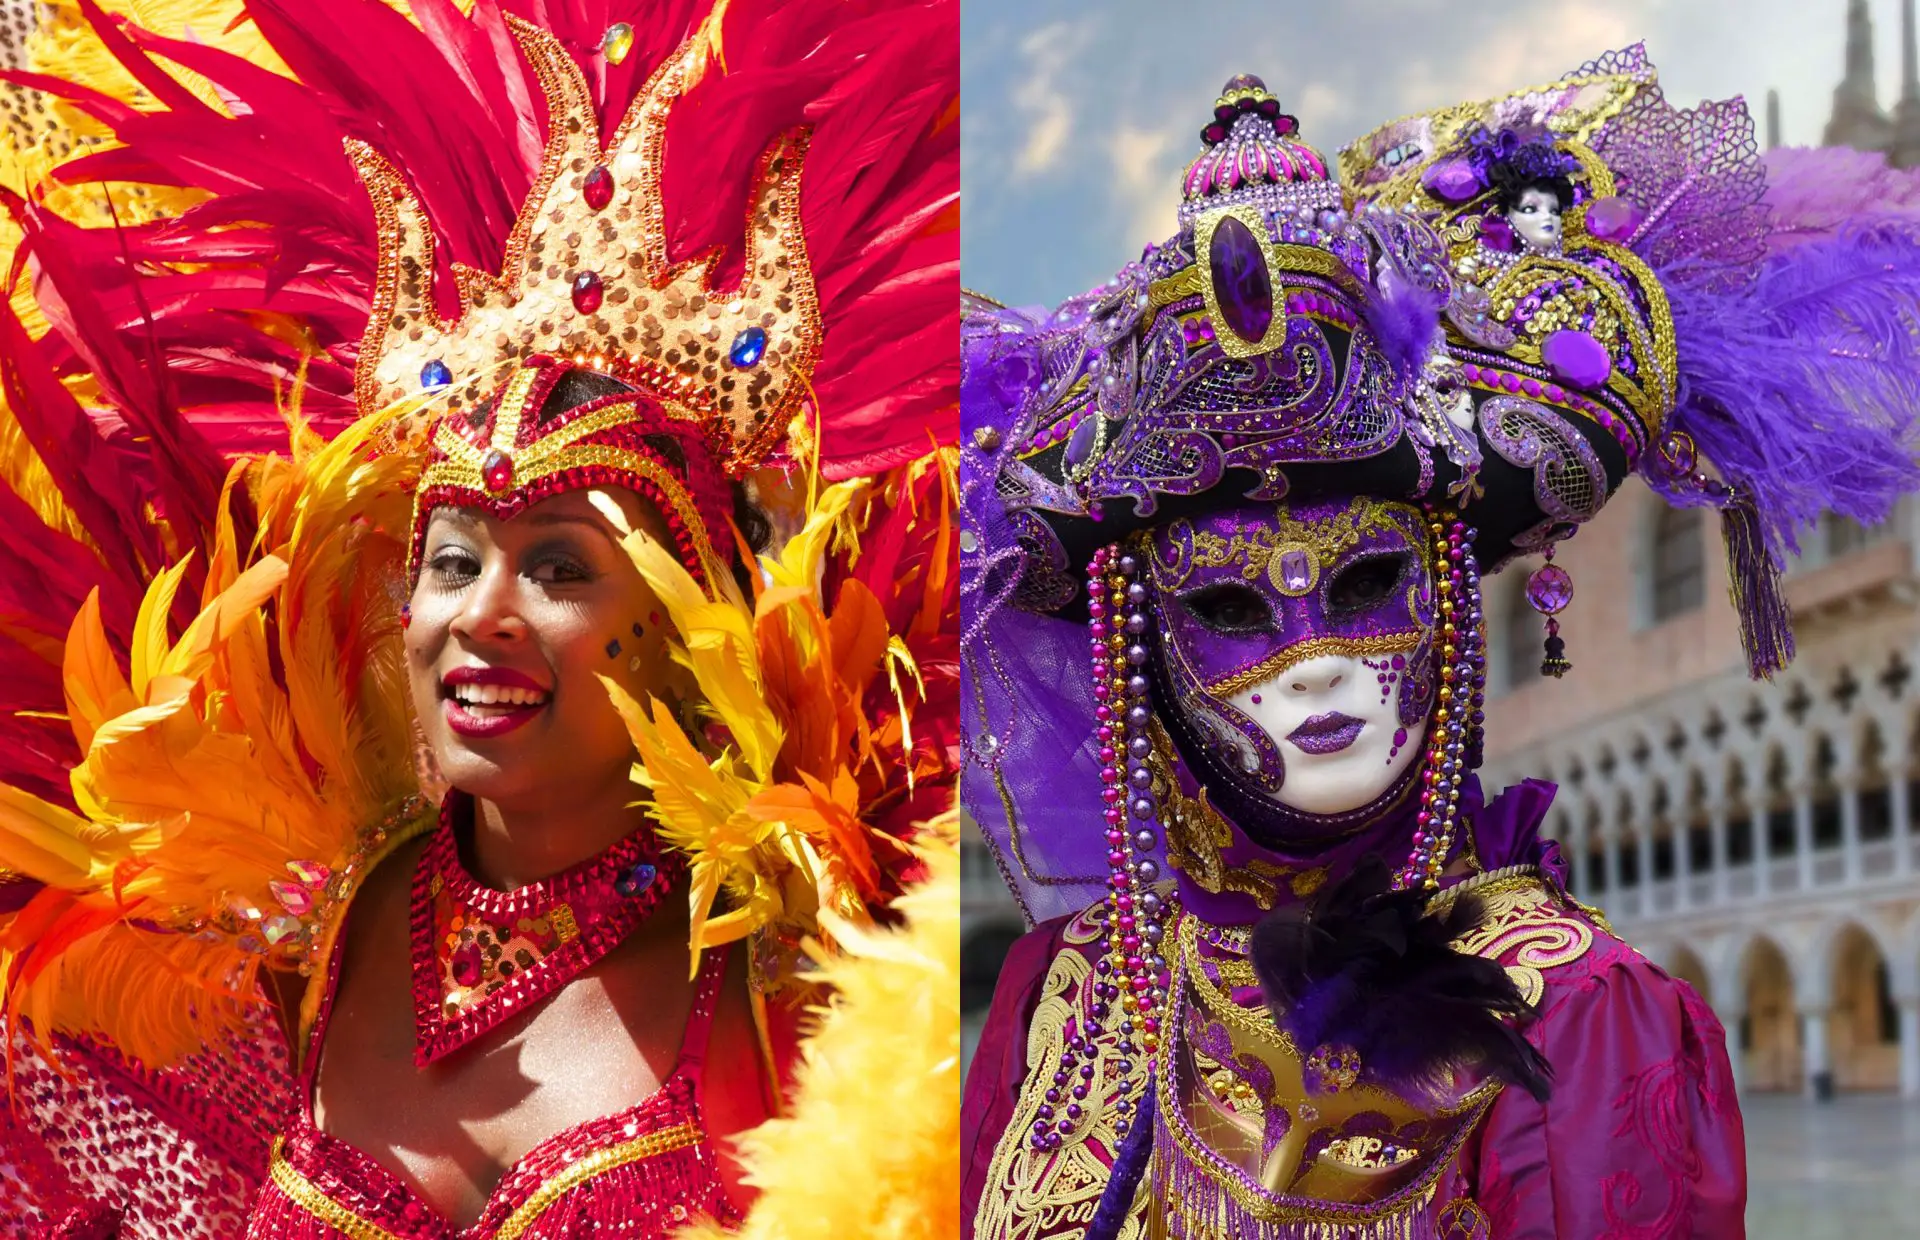 Carnivals from around the world - Venice and Rio de Janeiro